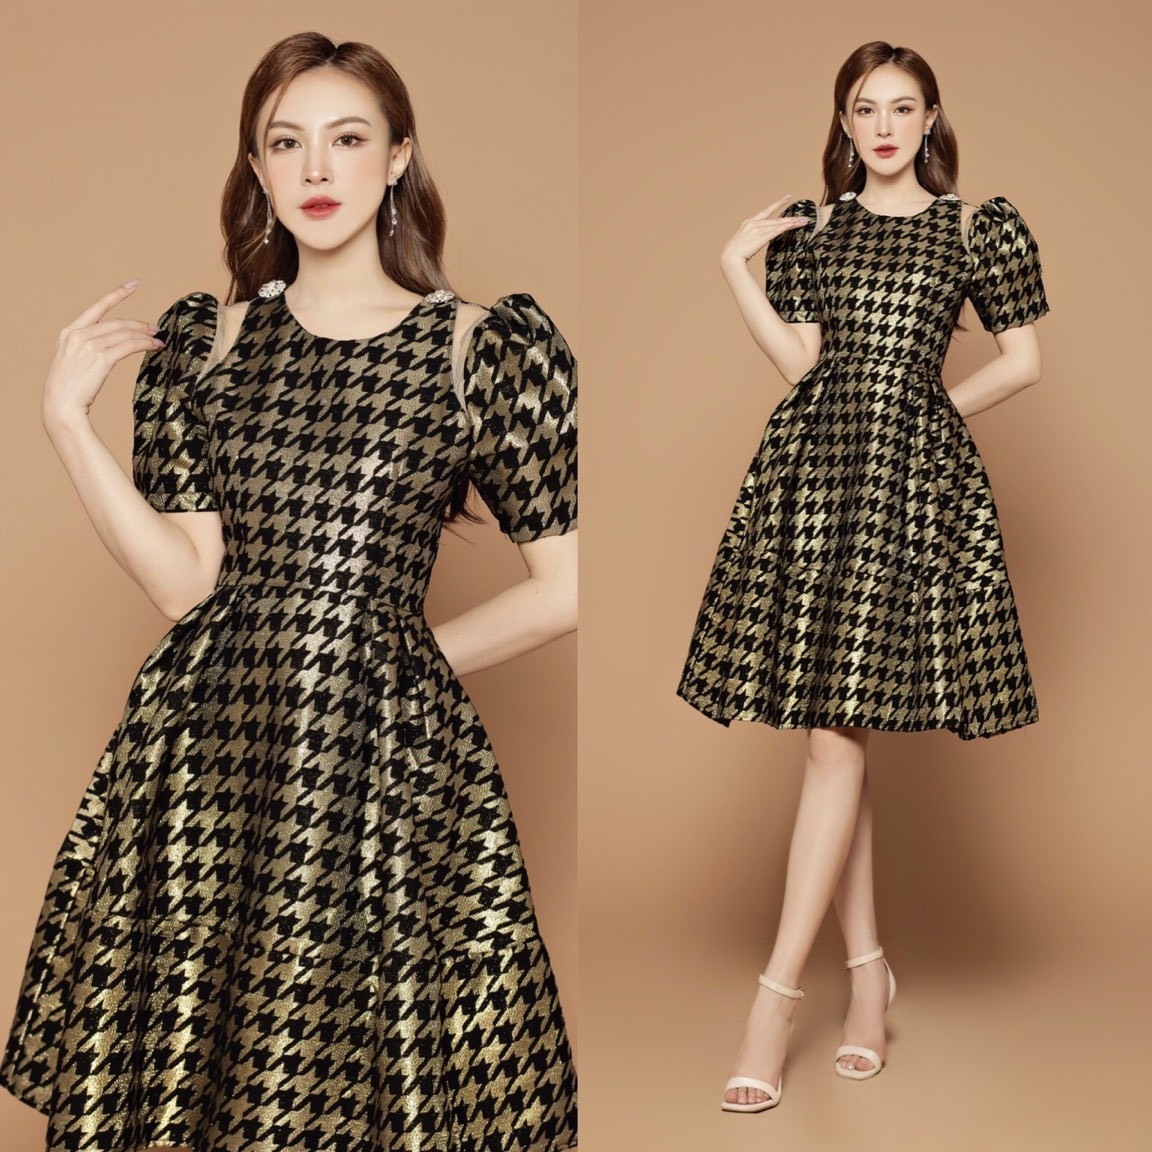 Váy Hoa Vintage Tiểu Thư  𝐋Ê𝐍 𝐒Ó𝐍𝐆 𝐕Á𝐘 𝐗𝐈𝐍𝐇 𝐗𝐔Ấ𝐓 𝐒Ắ𝐂   𝐂Ự𝐂 𝐏𝐇Ẩ𝐌 ĐẸ𝐏 𝐓Ớ𝐈 𝐓Ừ𝐍𝐆 𝐂𝐄𝐍𝐓𝐈𝐌𝐄𝐓   Facebook